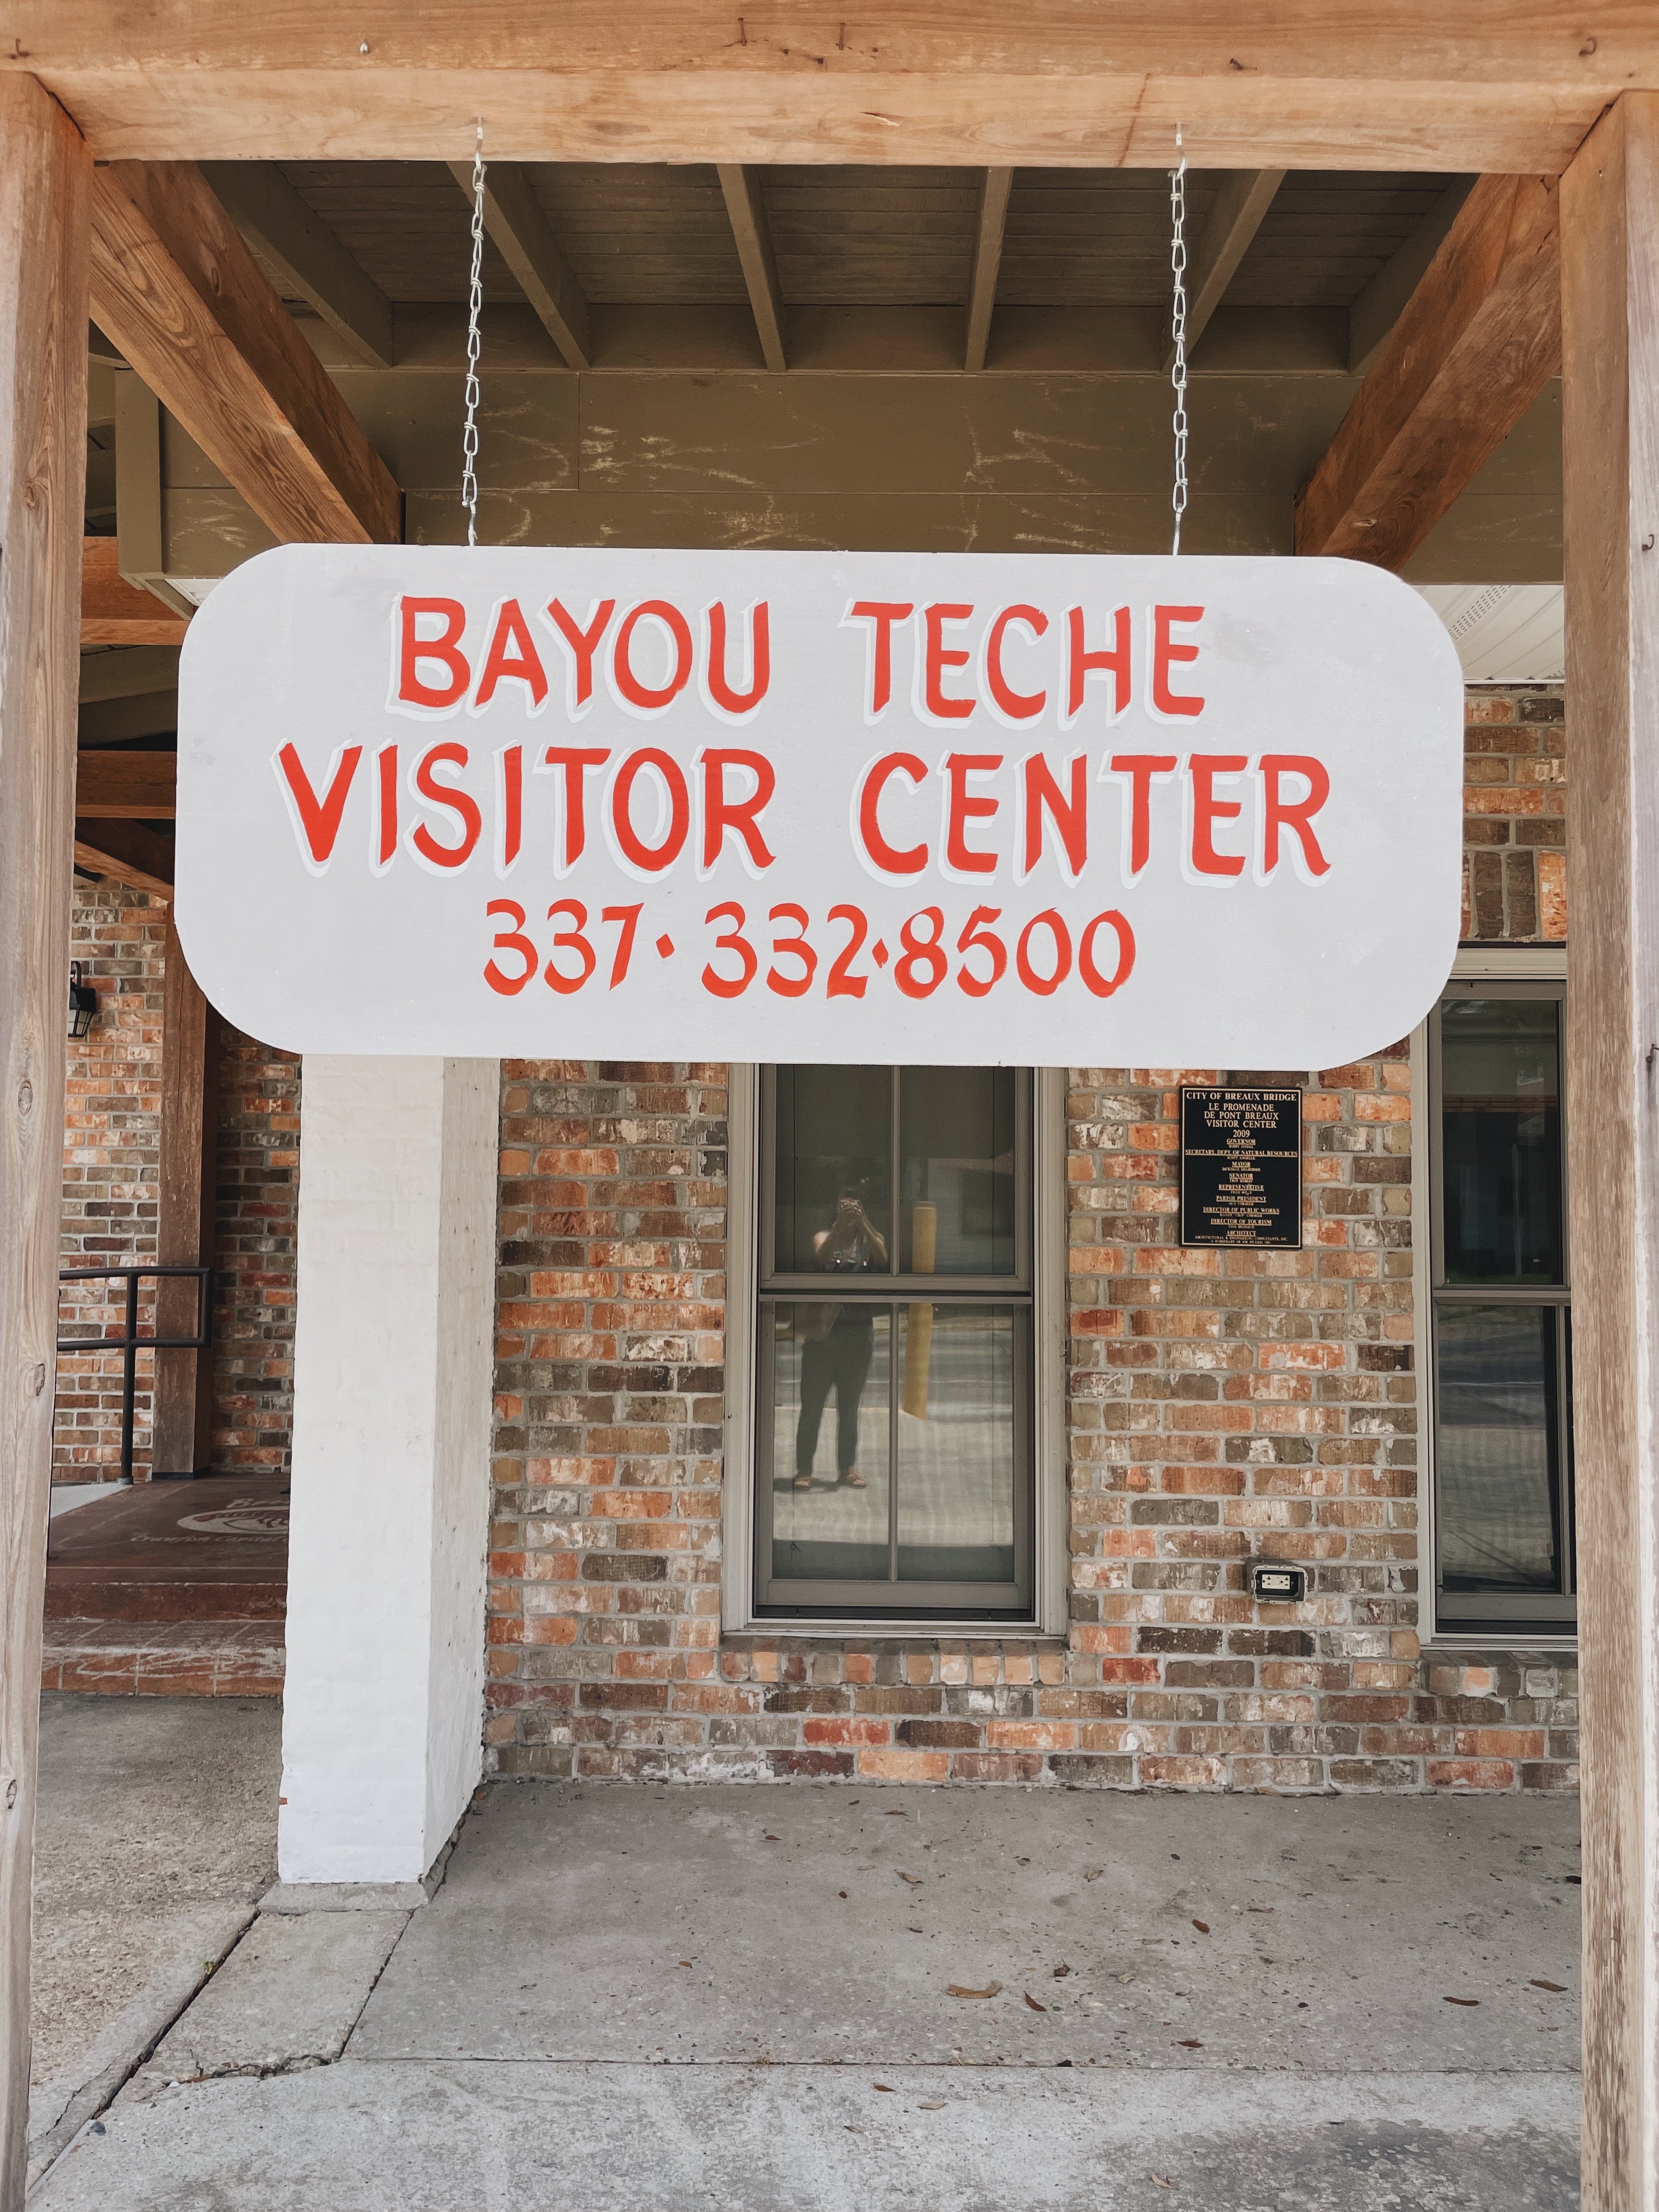 The Bayou Teche Visitor Center in Breaux Bridge, Louisiana